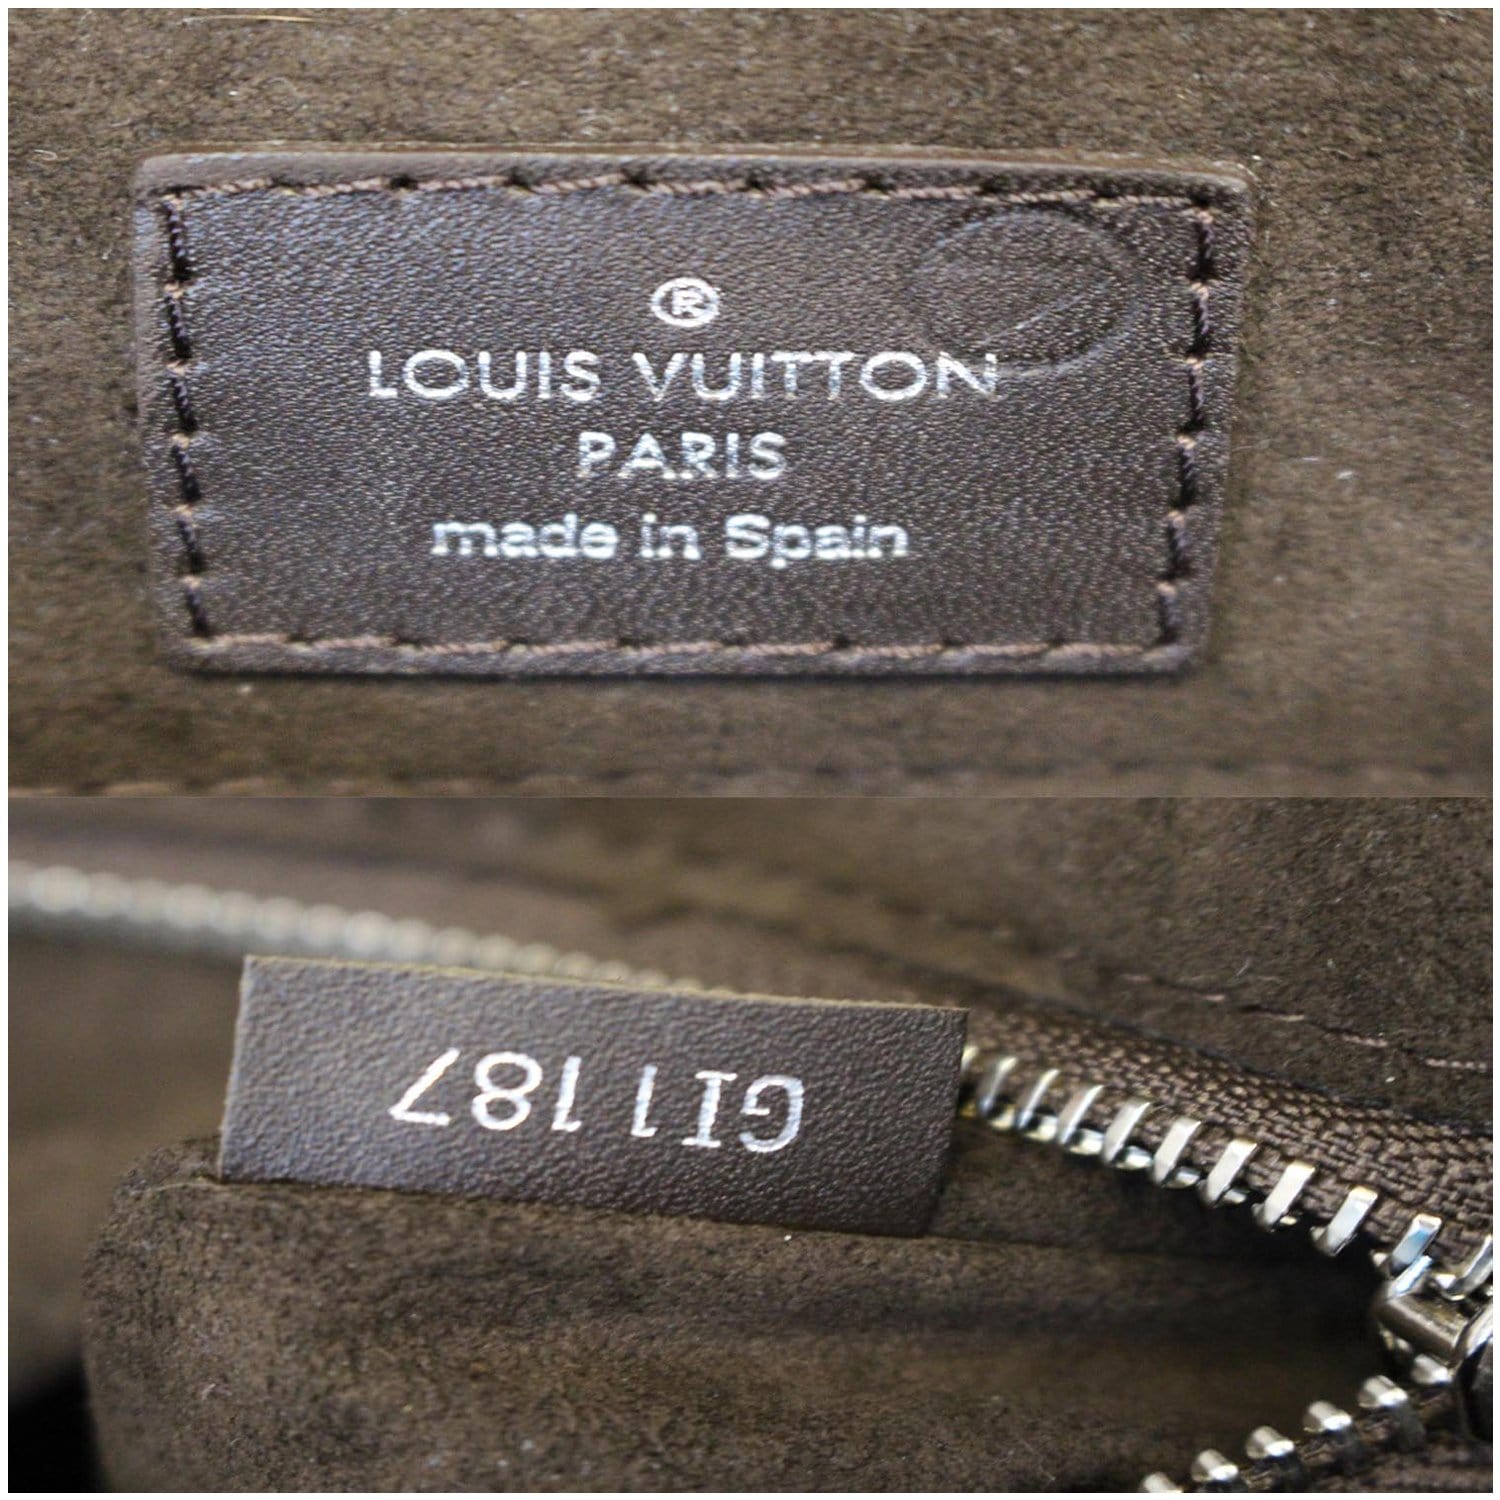 LOUIS VUITTON Harrington Messenger MM Shoulder Bag black Epi Leather mens